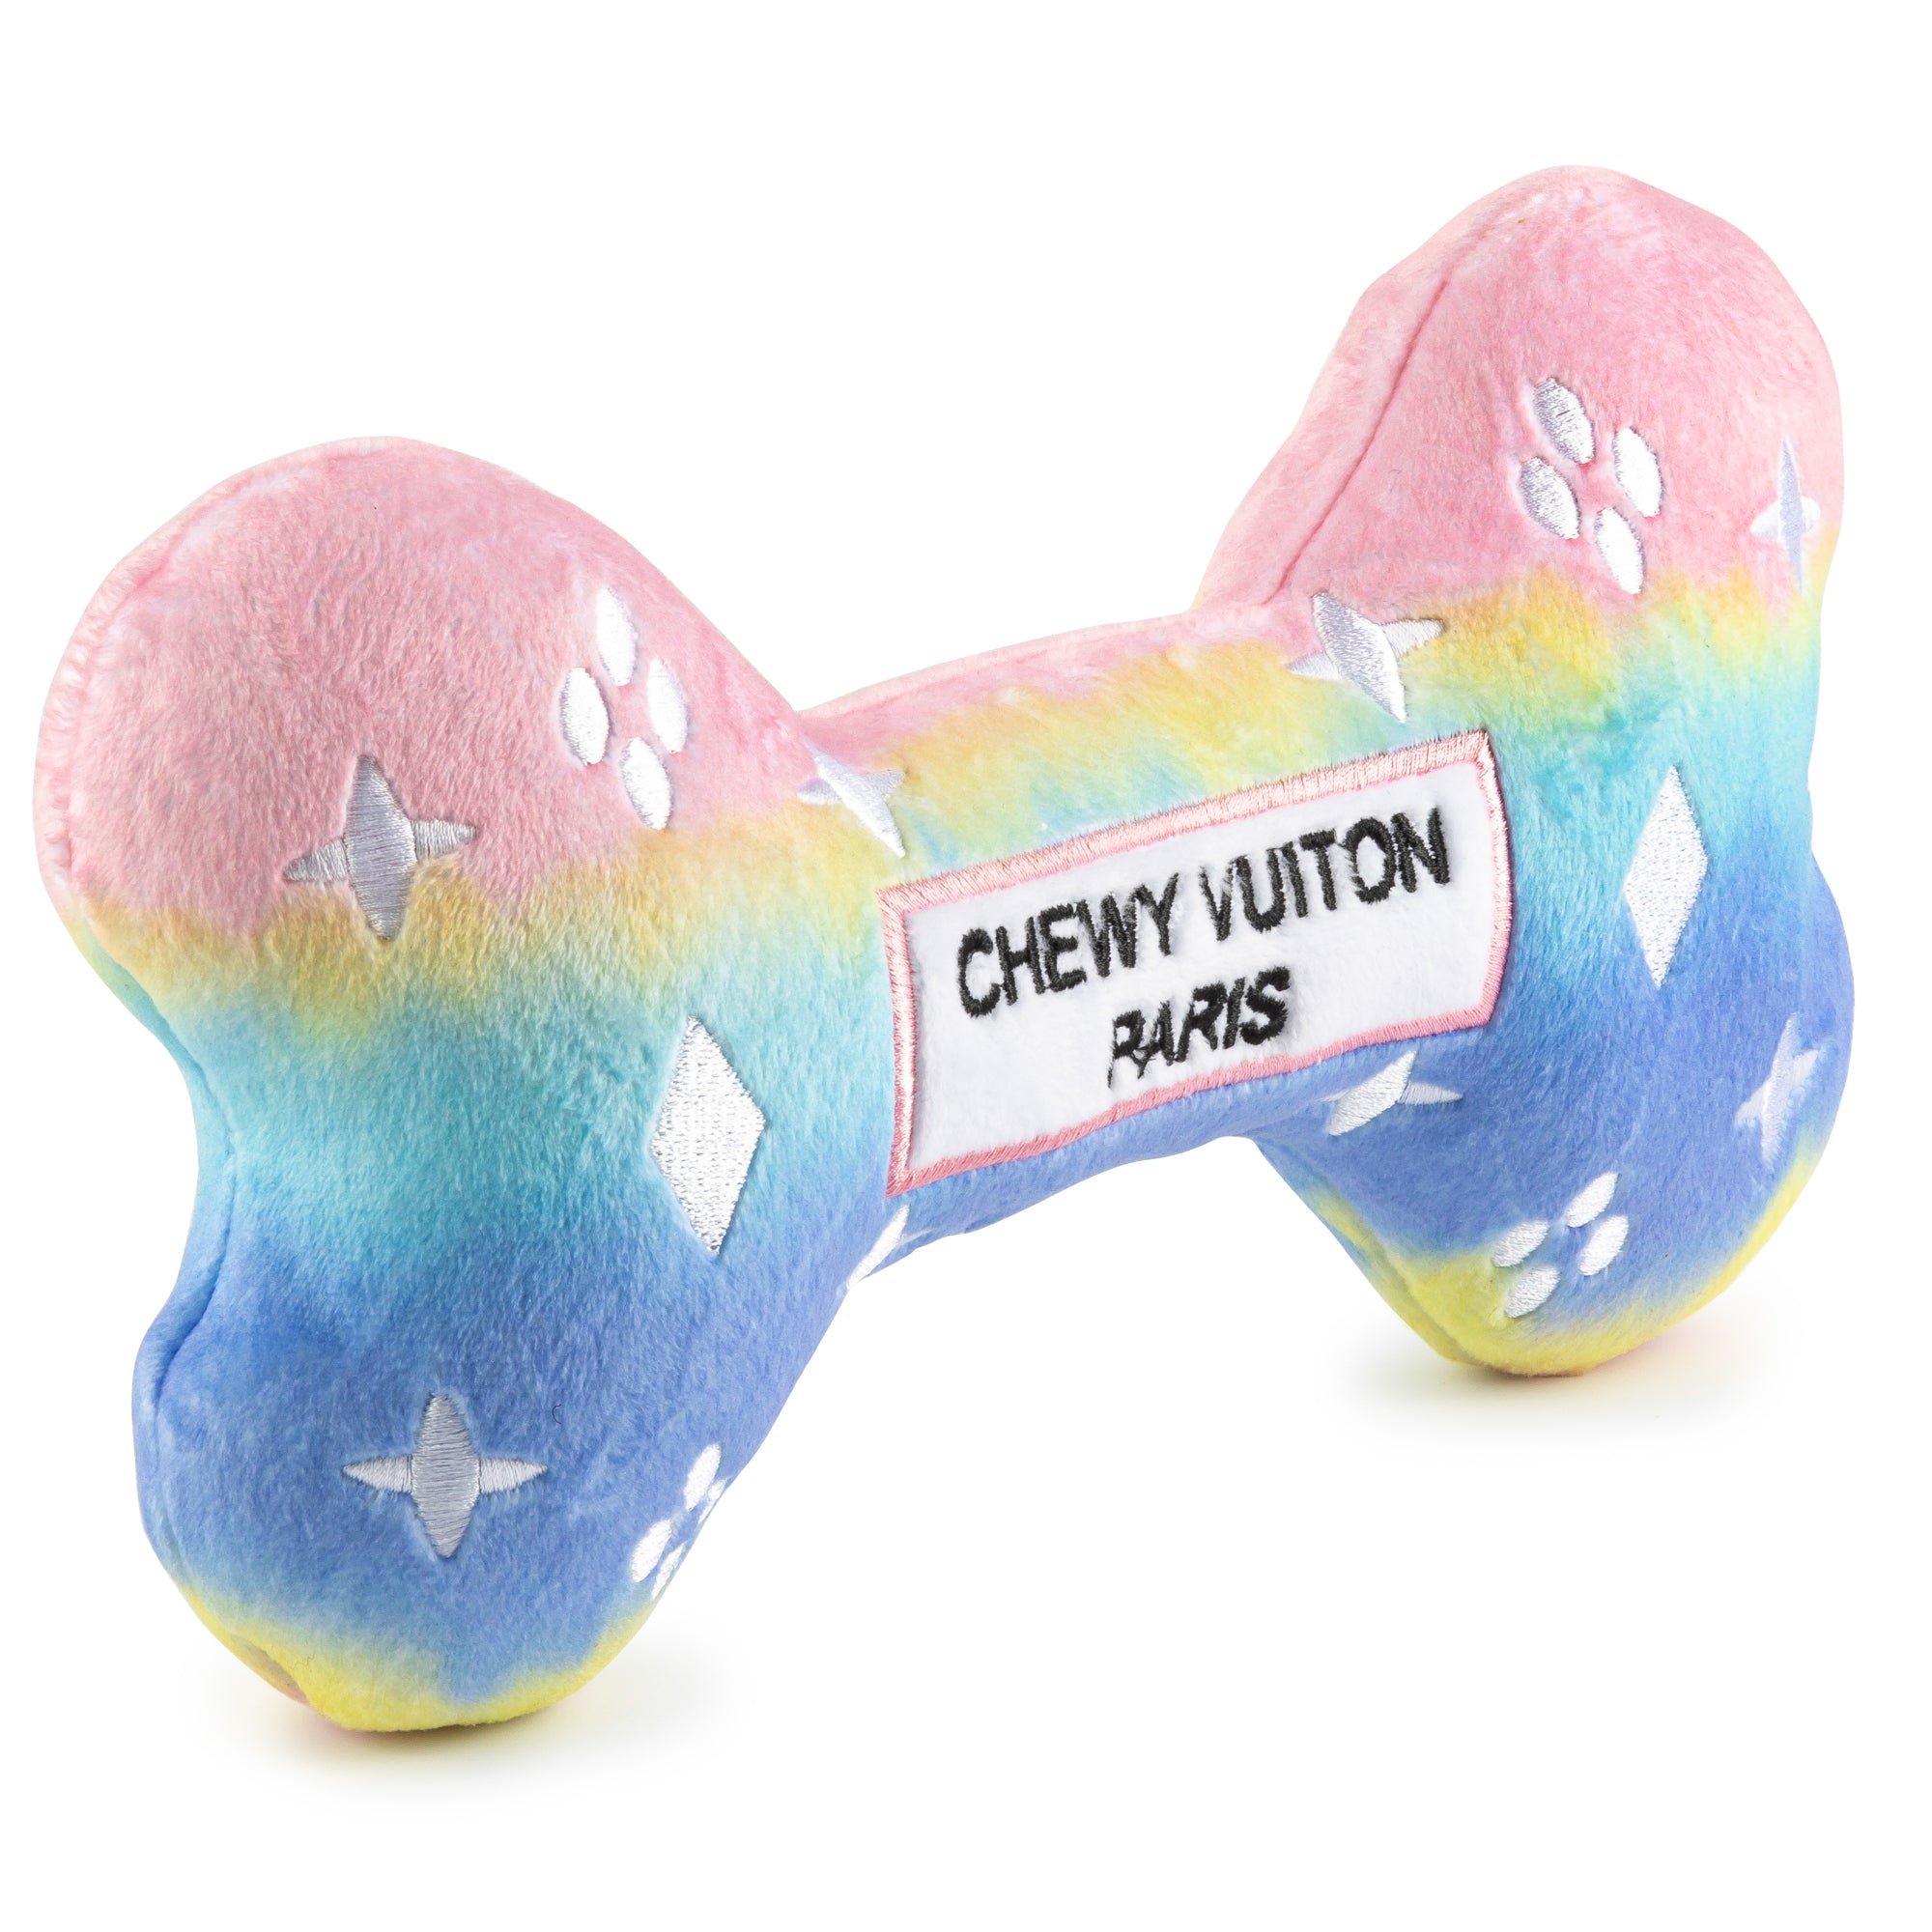 Pink Ombre Chewy V Luxury Dog Bone Toy – Peet Prints